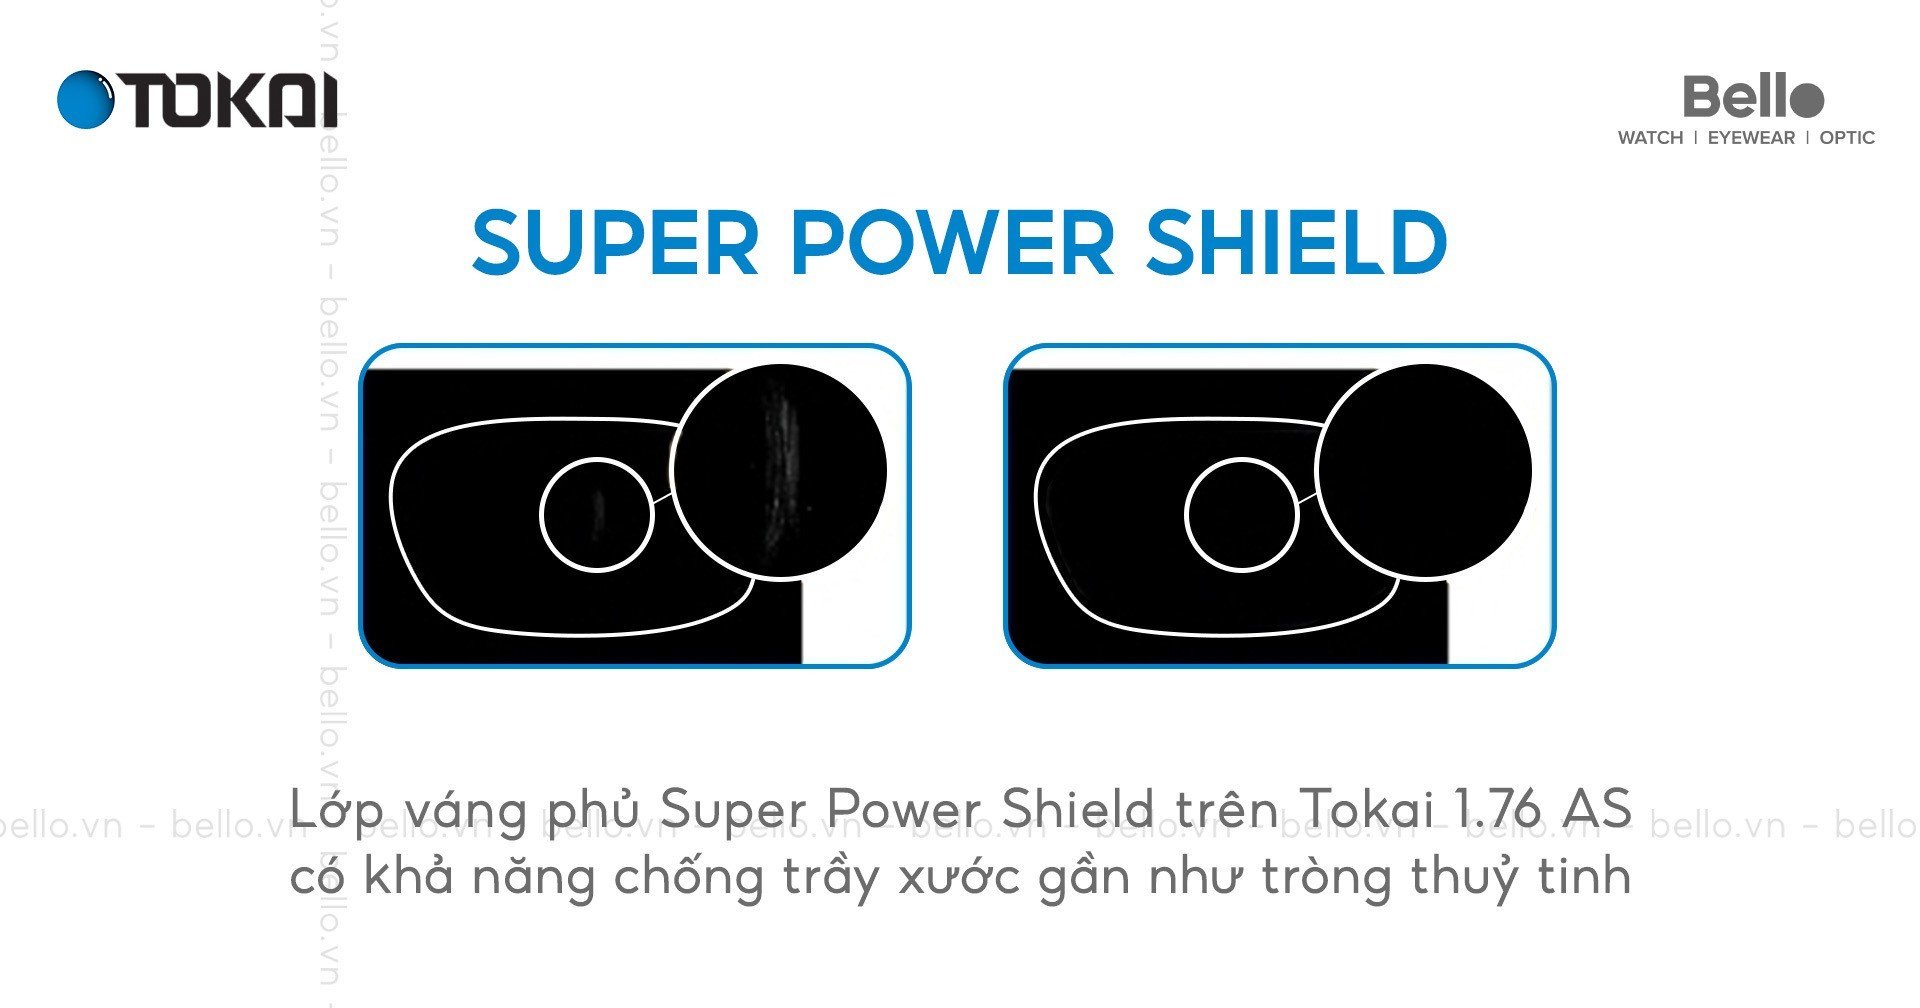 Lớp váng phủ Super Power Shield - SPS